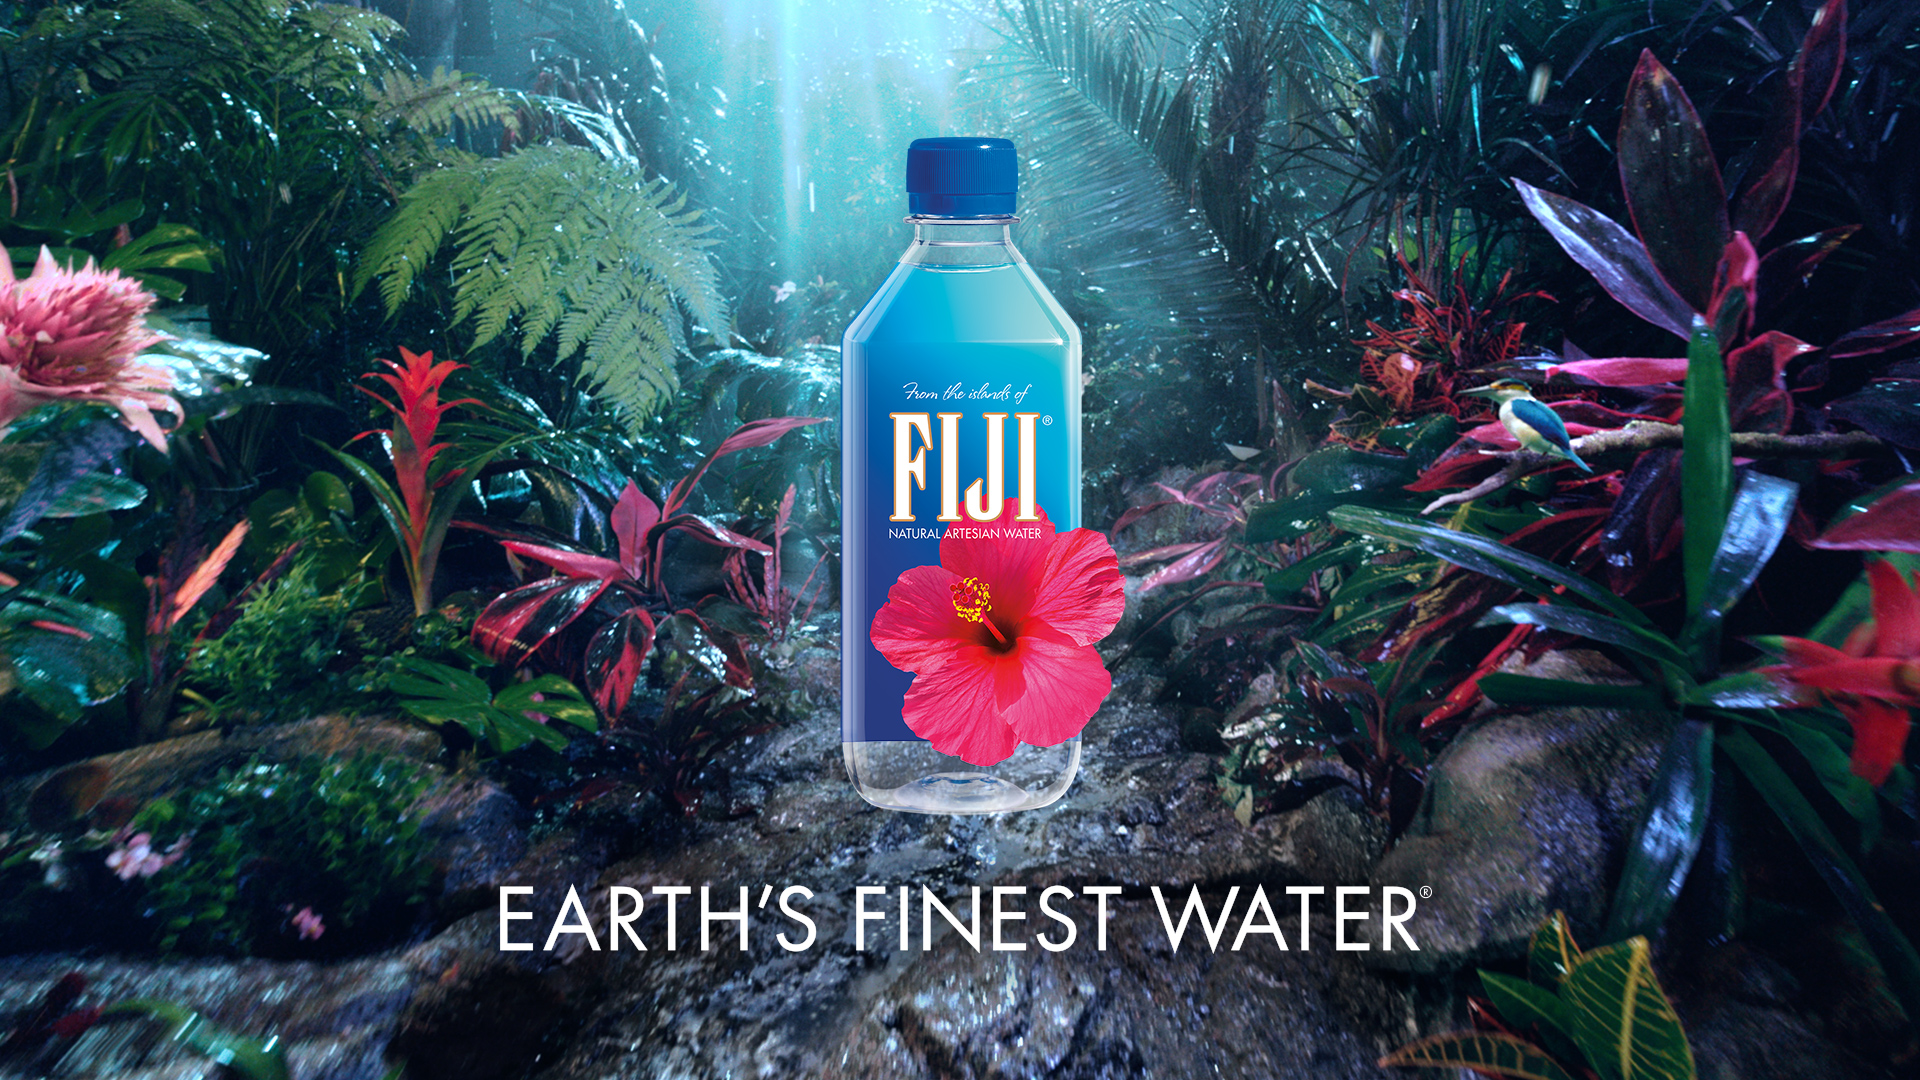 Free download FIJI Water on Every drop of FIJI Water filters through ...